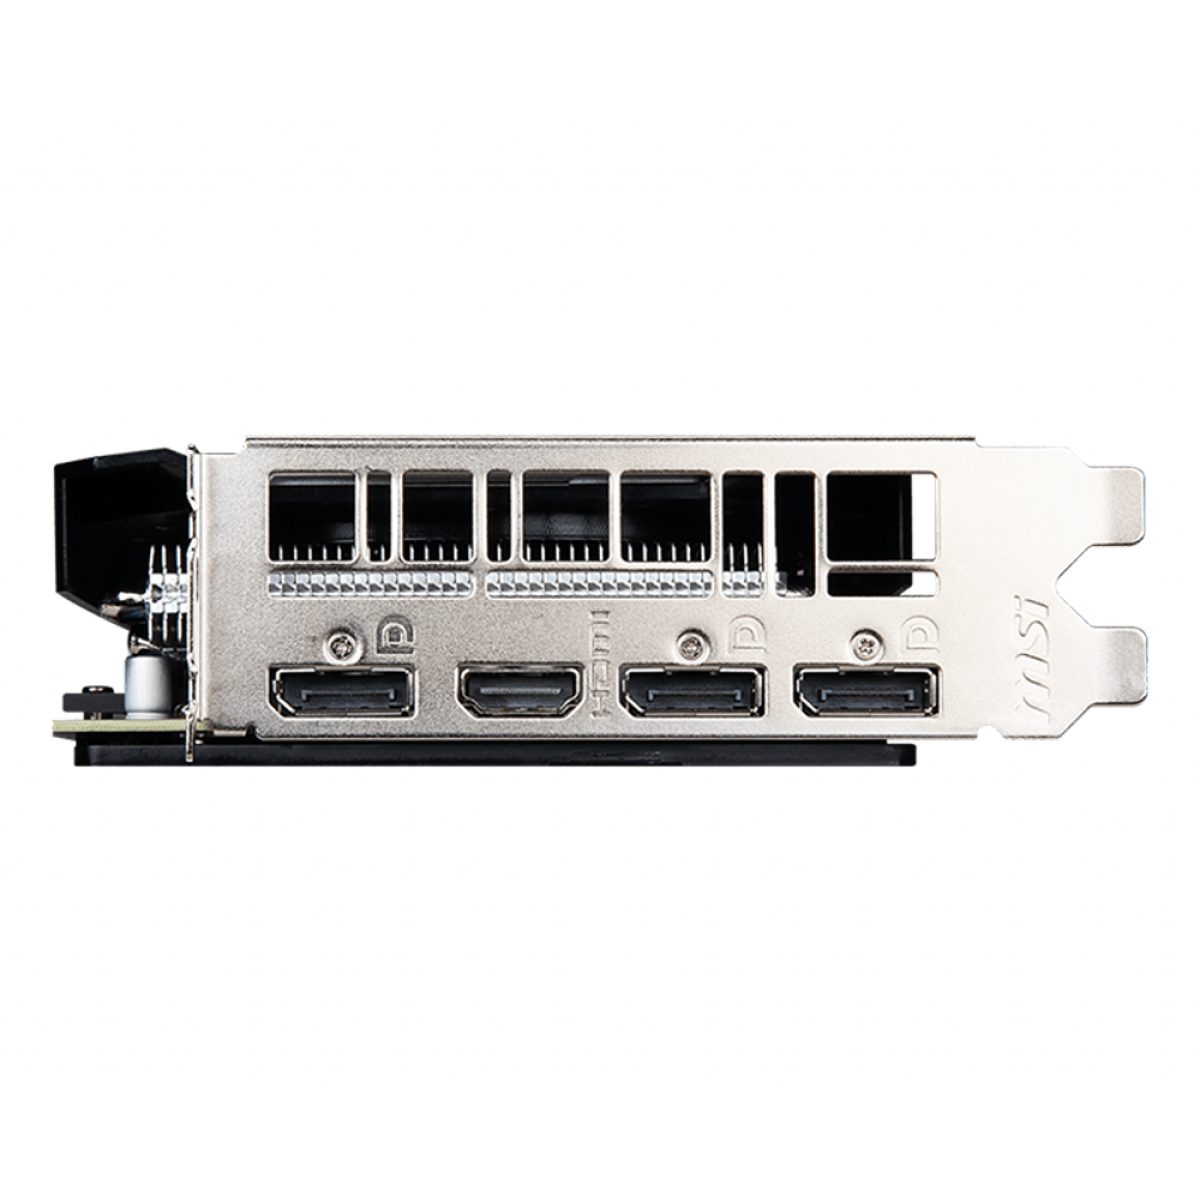 Placa de Video MSI GeForce RTX 2060 Ventus OC Dual, 12GB GDDR6, DLSS, Ray Tracing